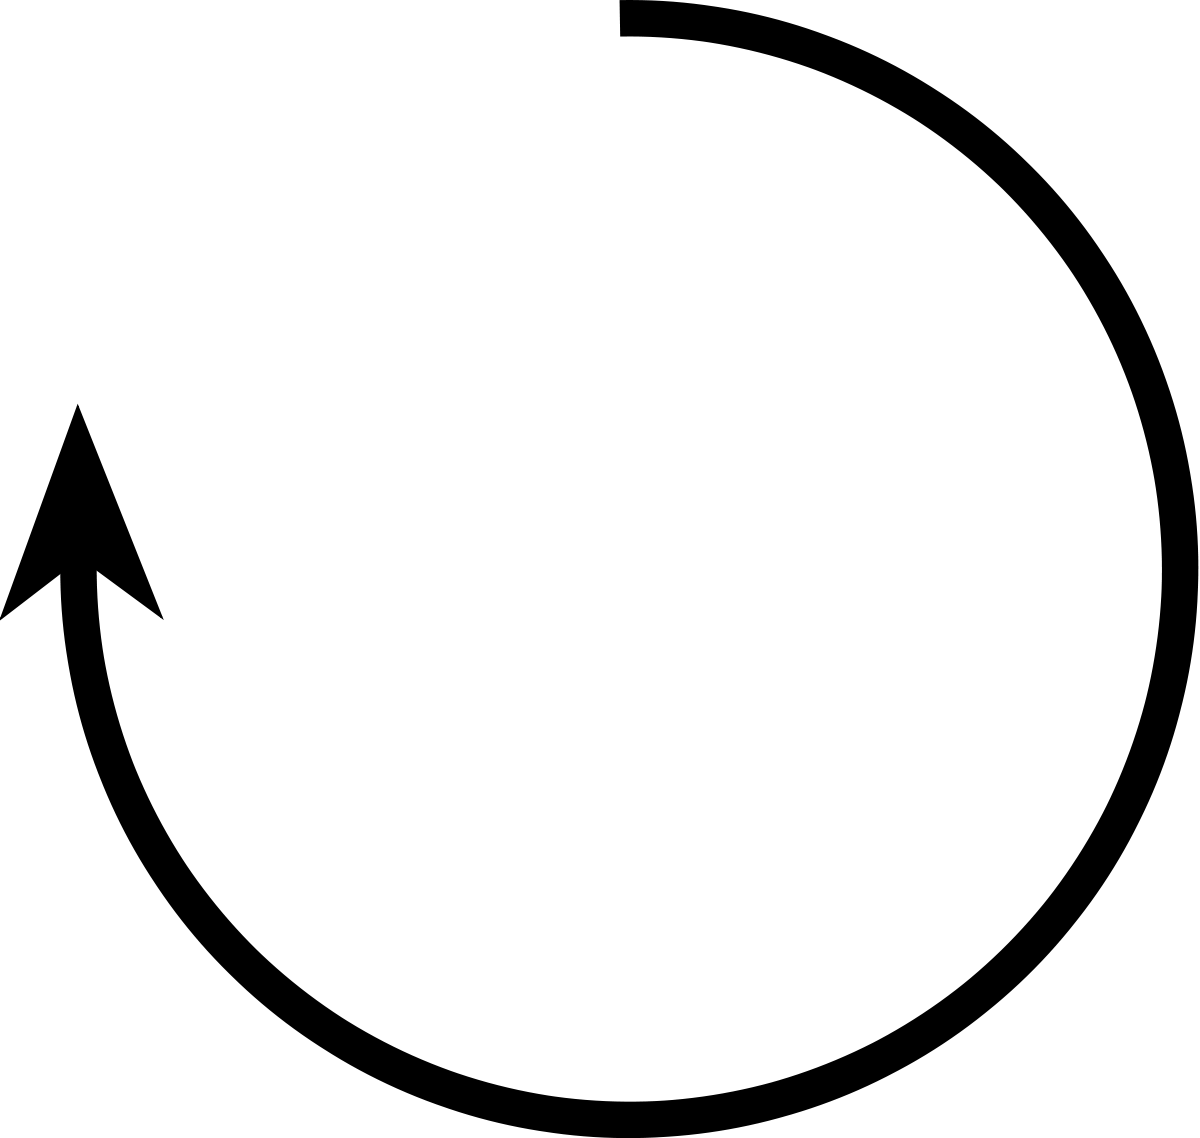 Circle with Whole Arrow Logo - Clockwise